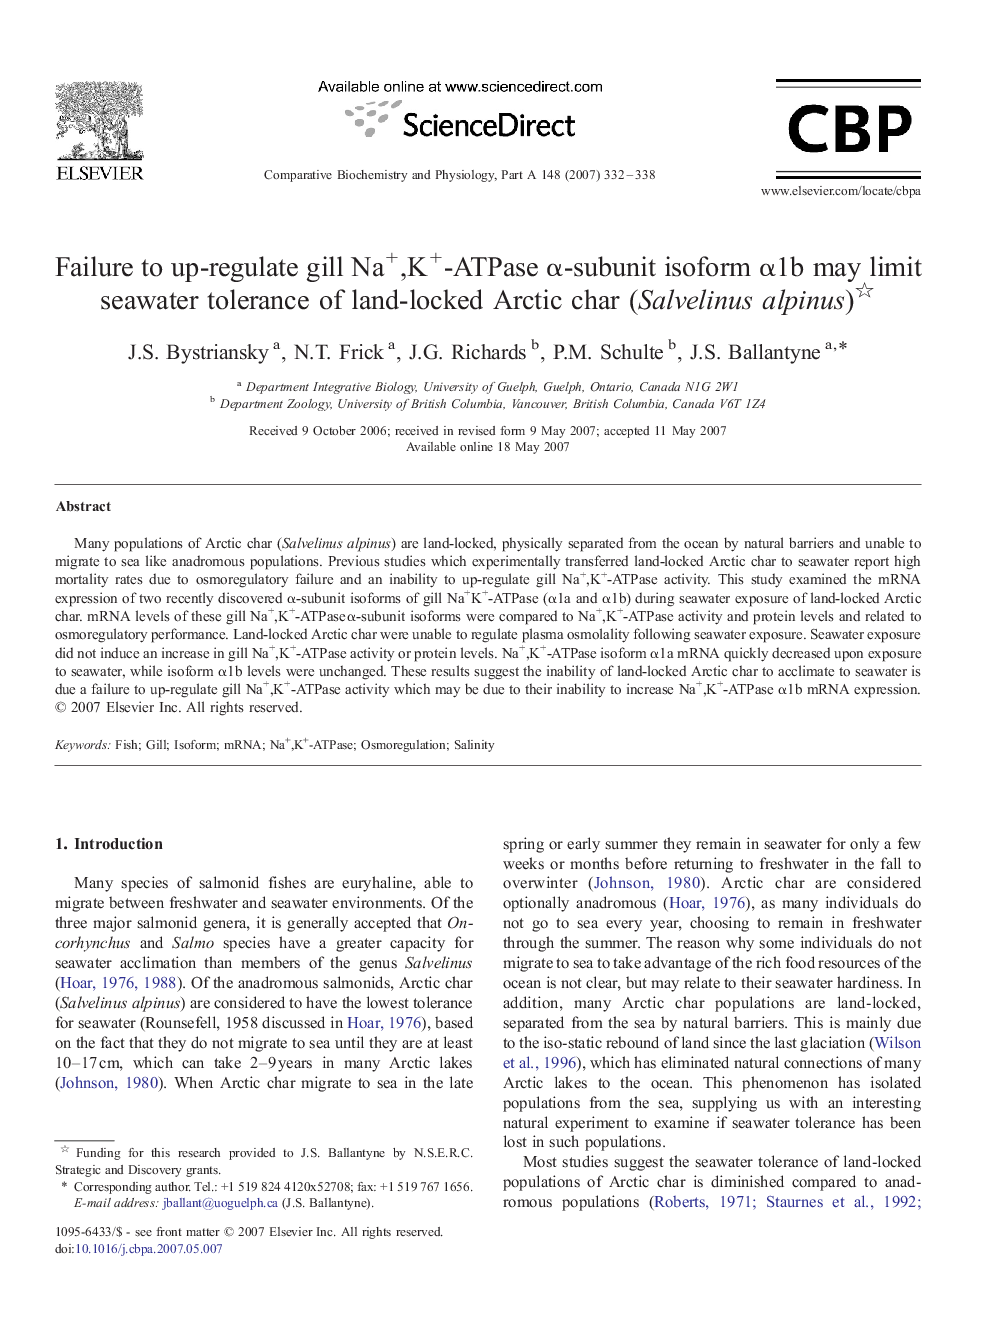 Failure to up-regulate gill Na+,K+-ATPase α-subunit isoform α1b may limit seawater tolerance of land-locked Arctic char (Salvelinus alpinus) 